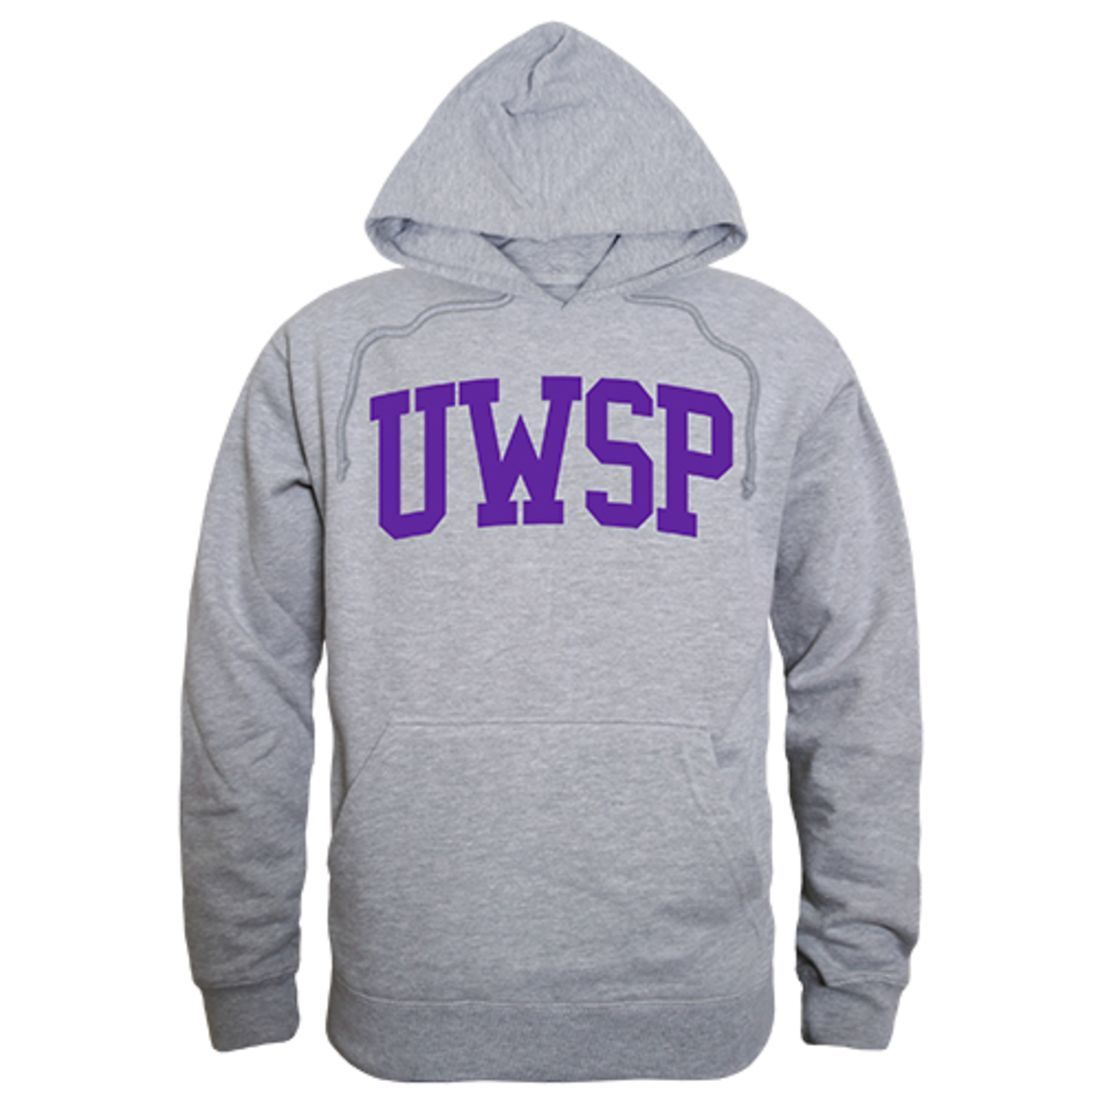 UWSP University of Wisconsin Stevens Point Game Day Hoodie Sweatshirt Heather Grey-Campus-Wardrobe